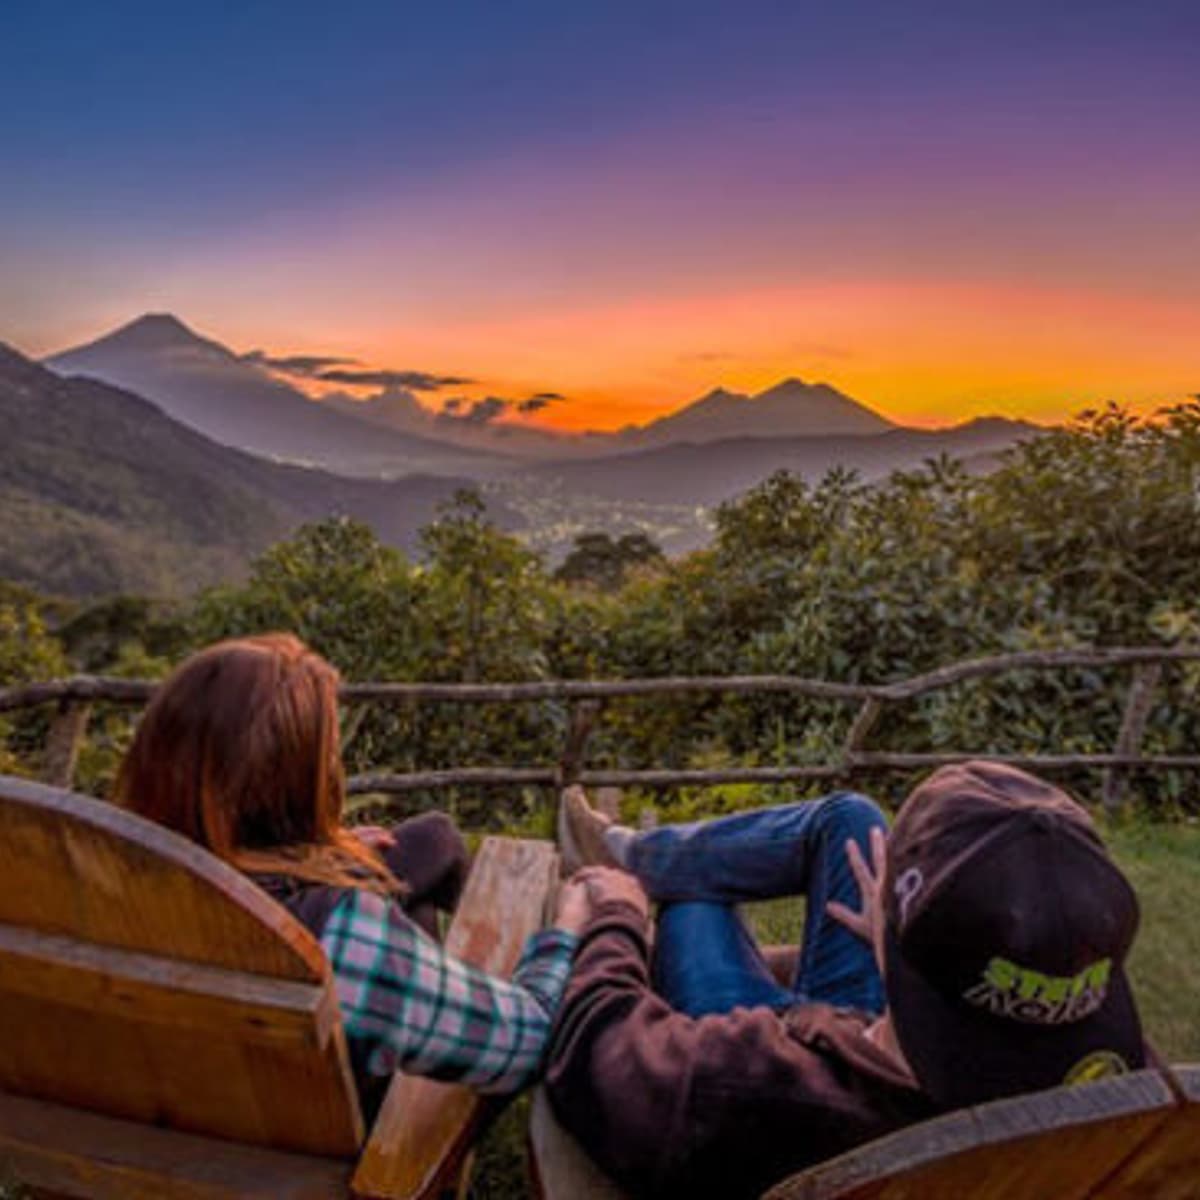 Guatemala Earth Lodge Sunset View during custom Guatemala tour